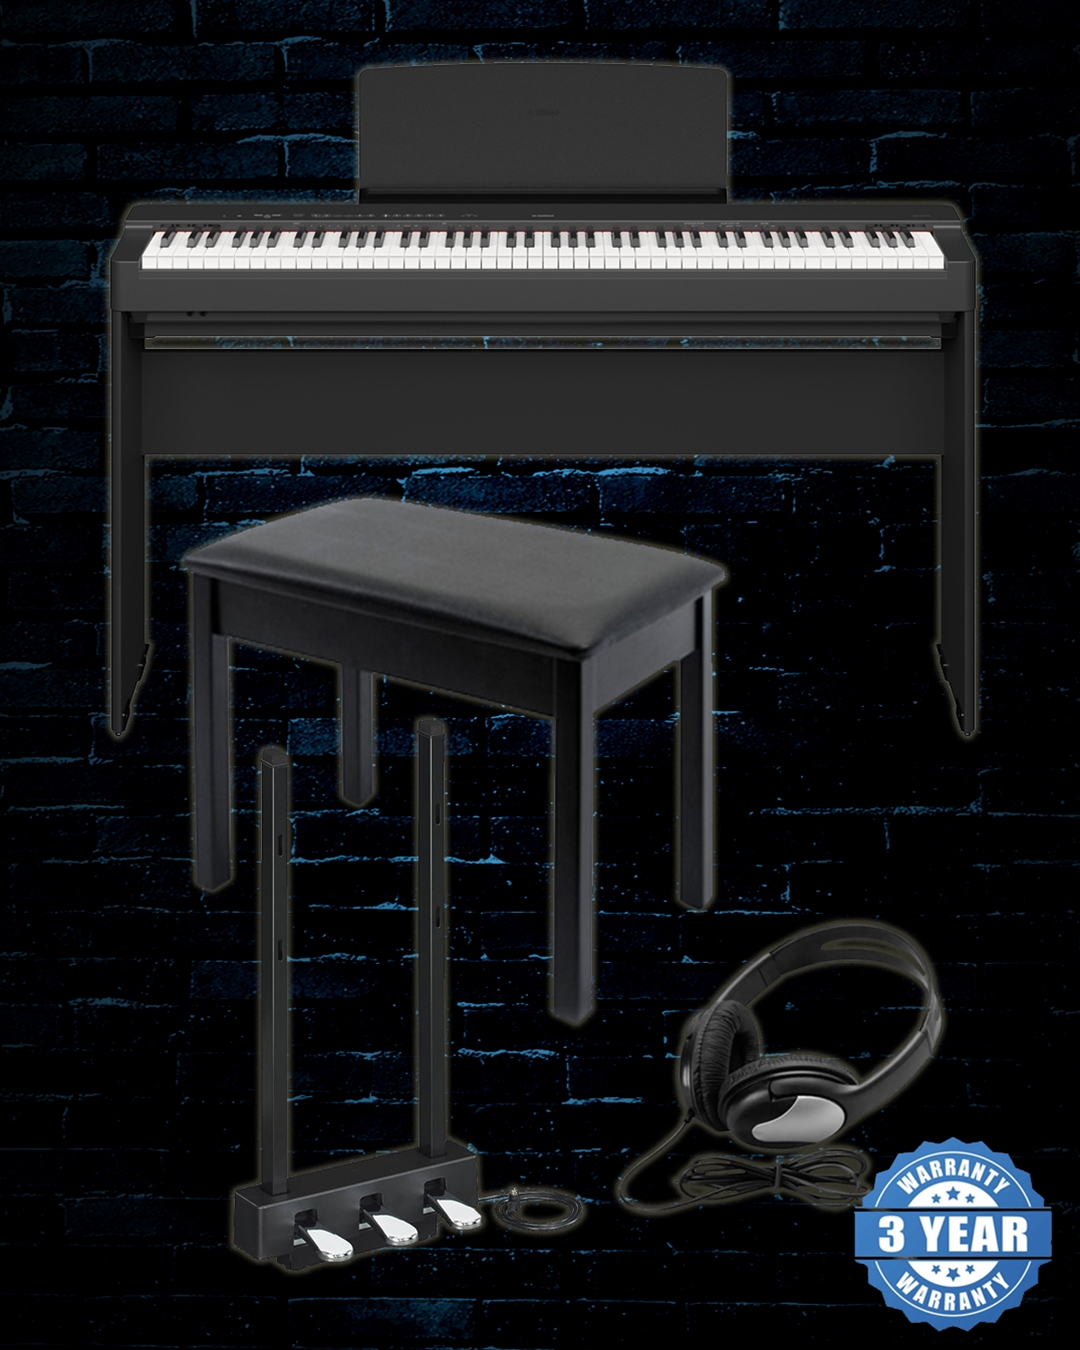 Yamaha P225 Digital Piano